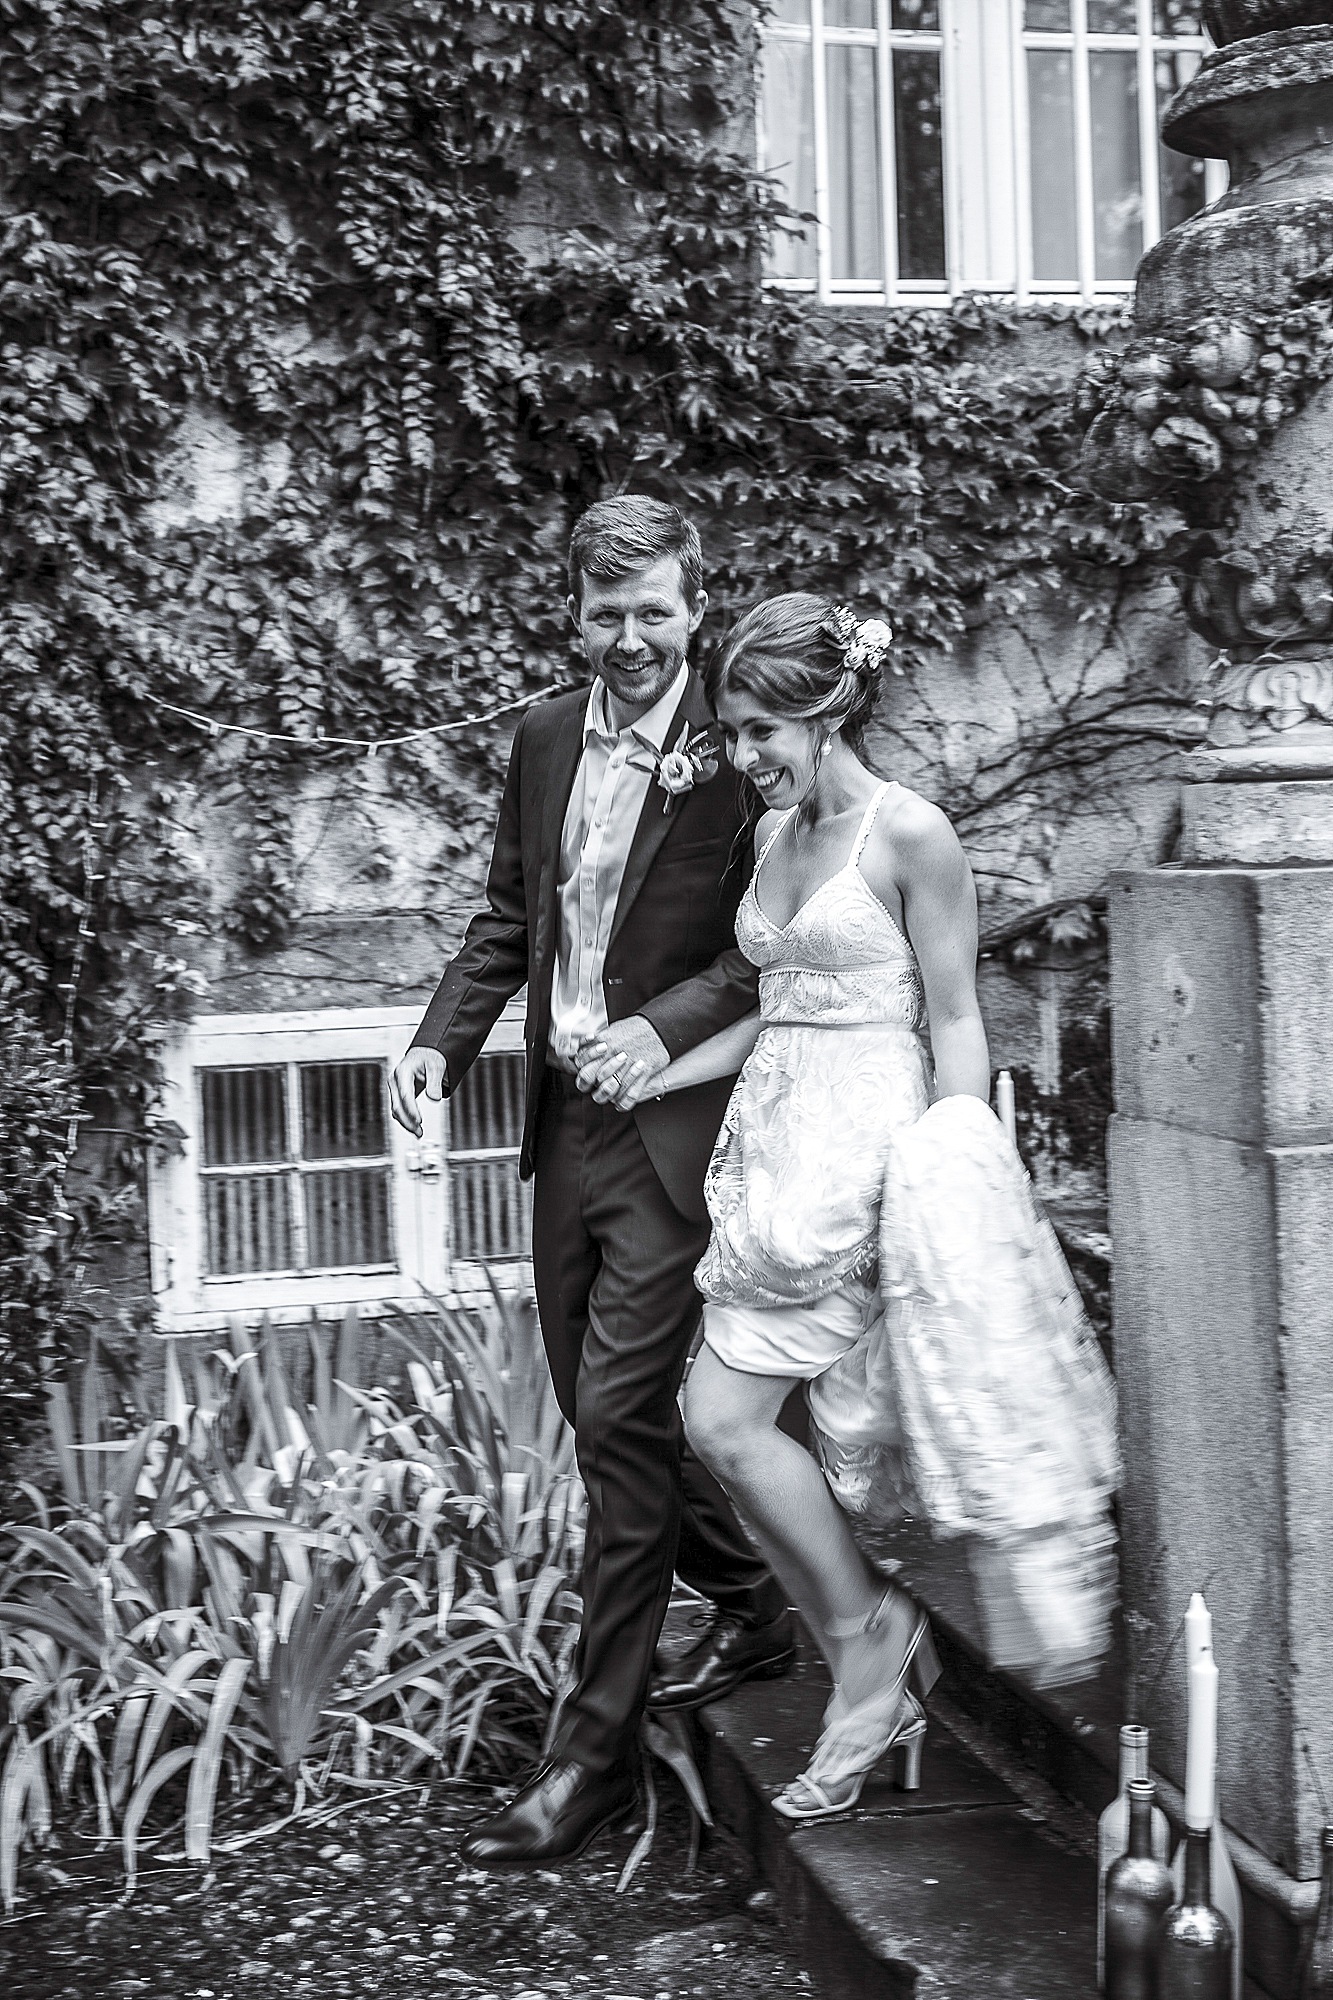 https://www.lovemydress.net/wp-content/uploads/2021/03/35-Romantic-French-chateau-wedding.jpg